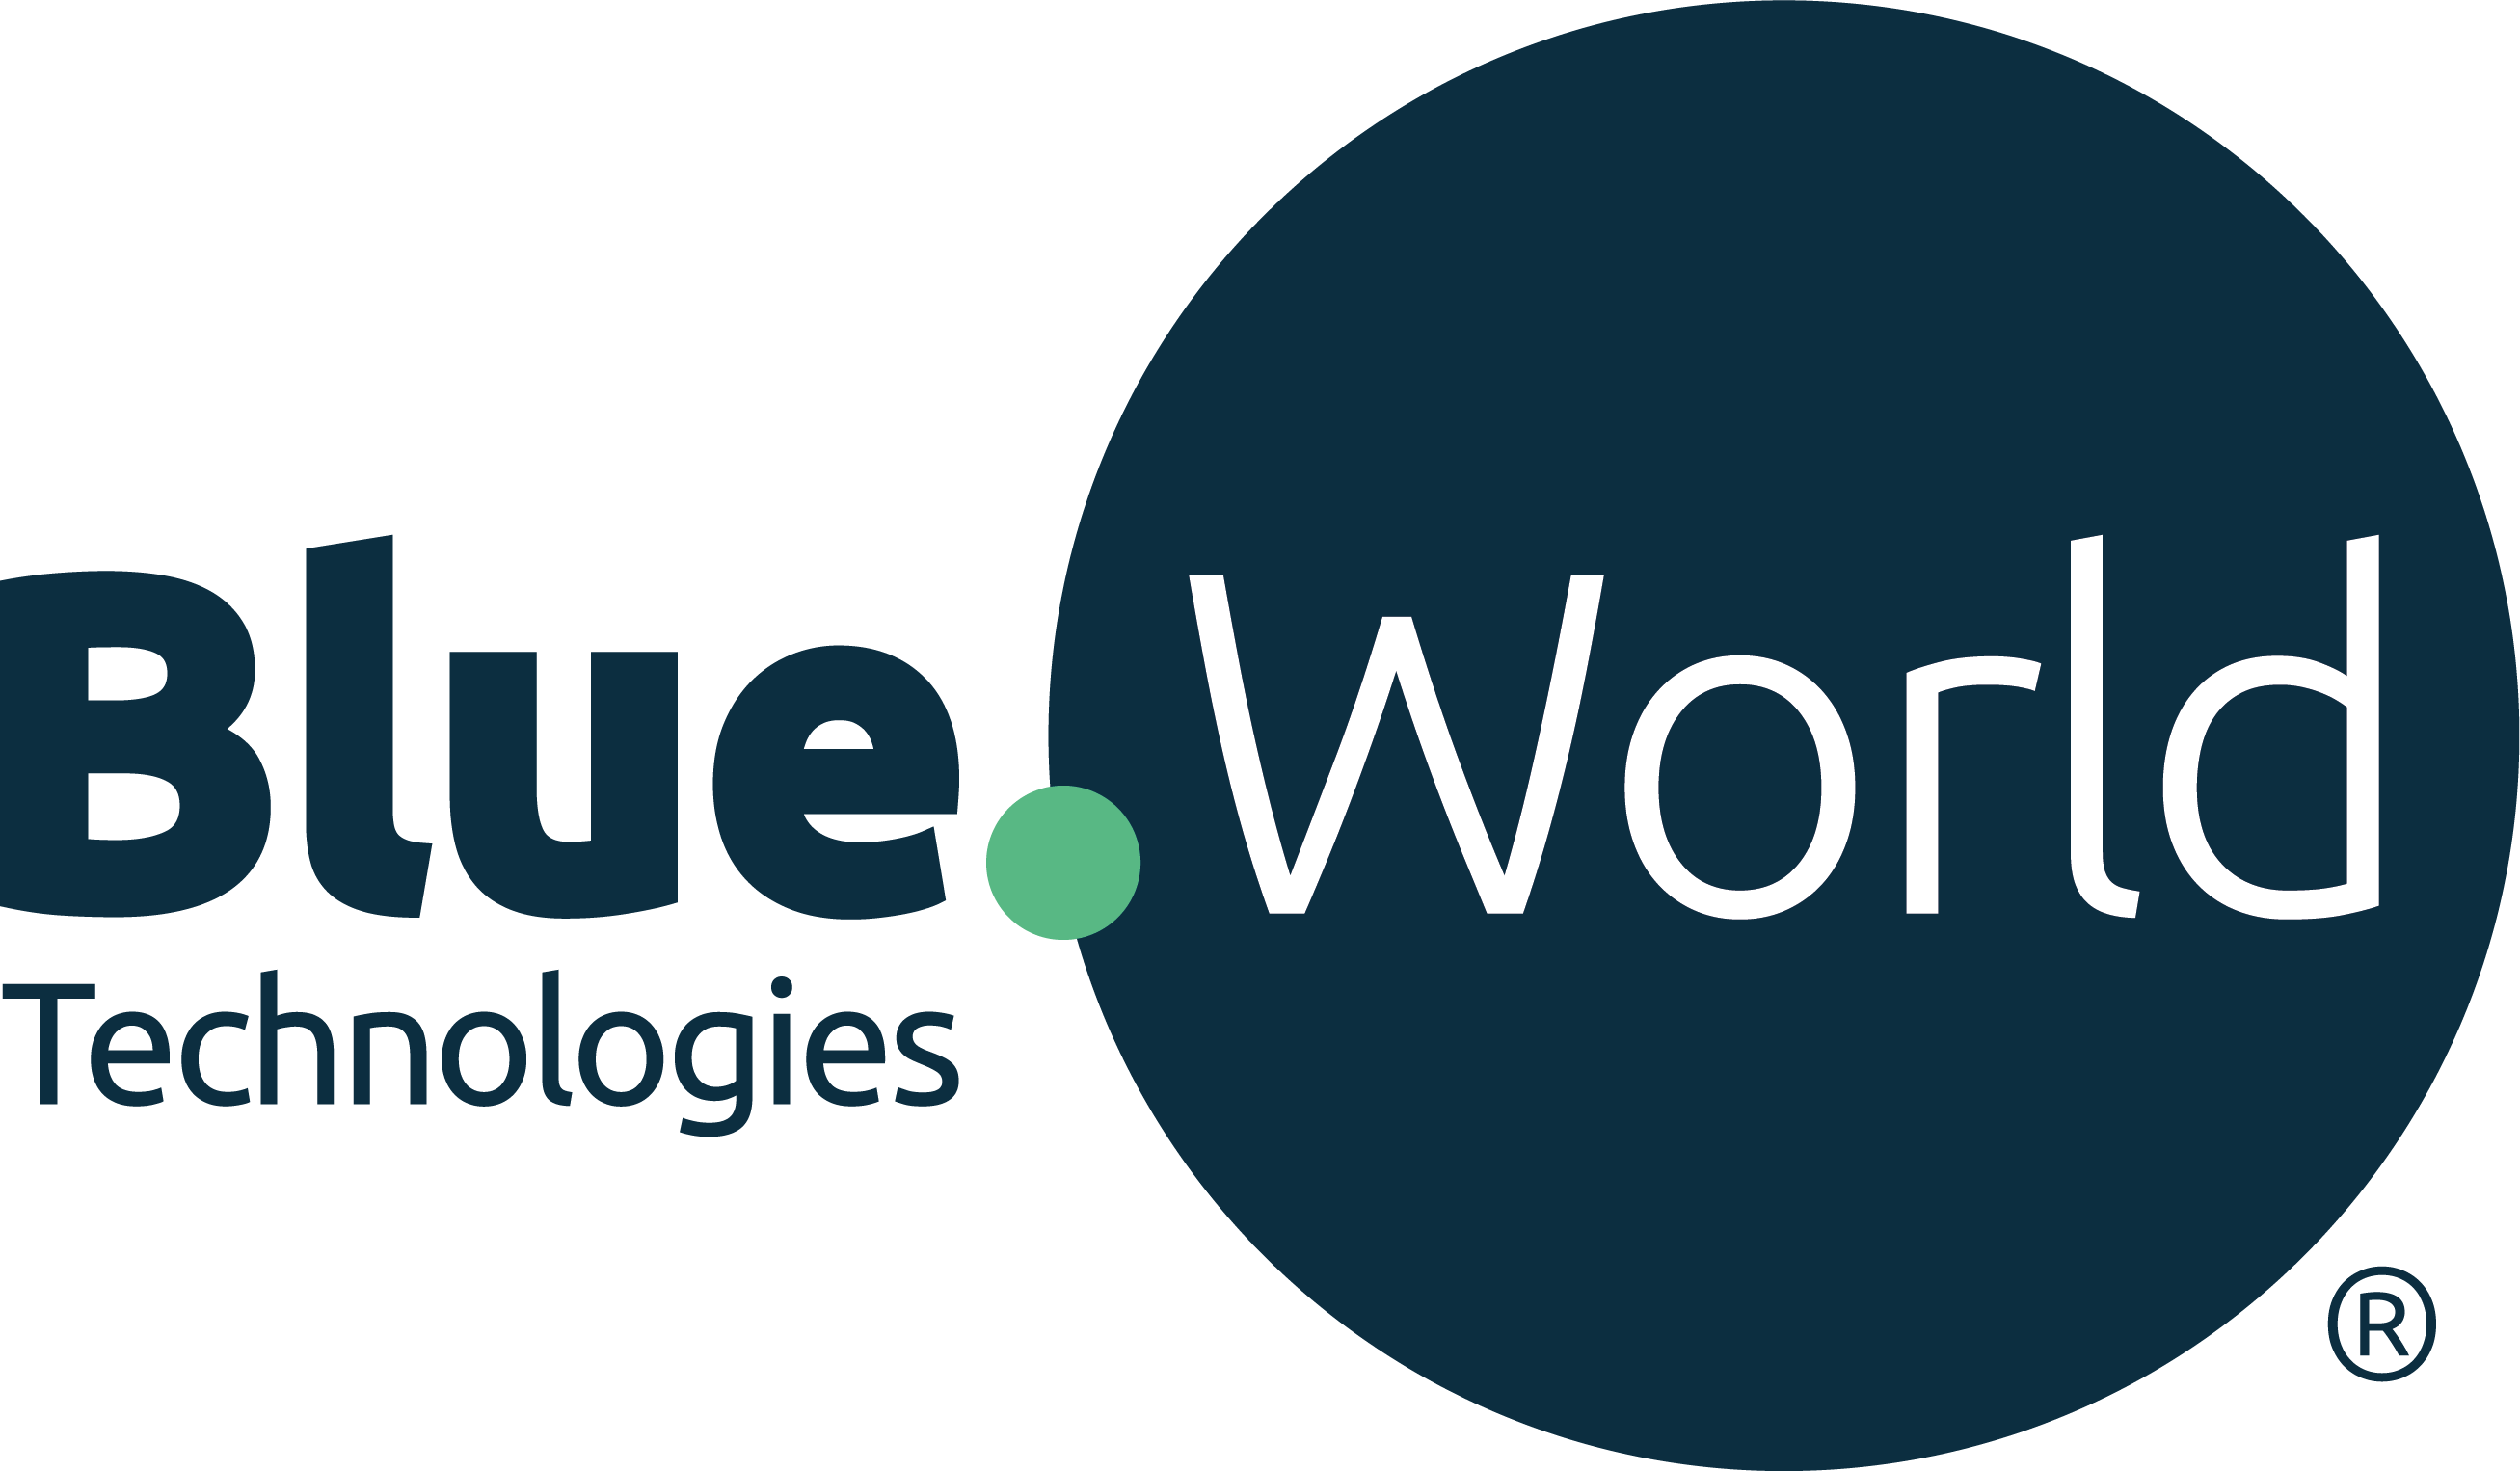 Blue World Technologies' logo